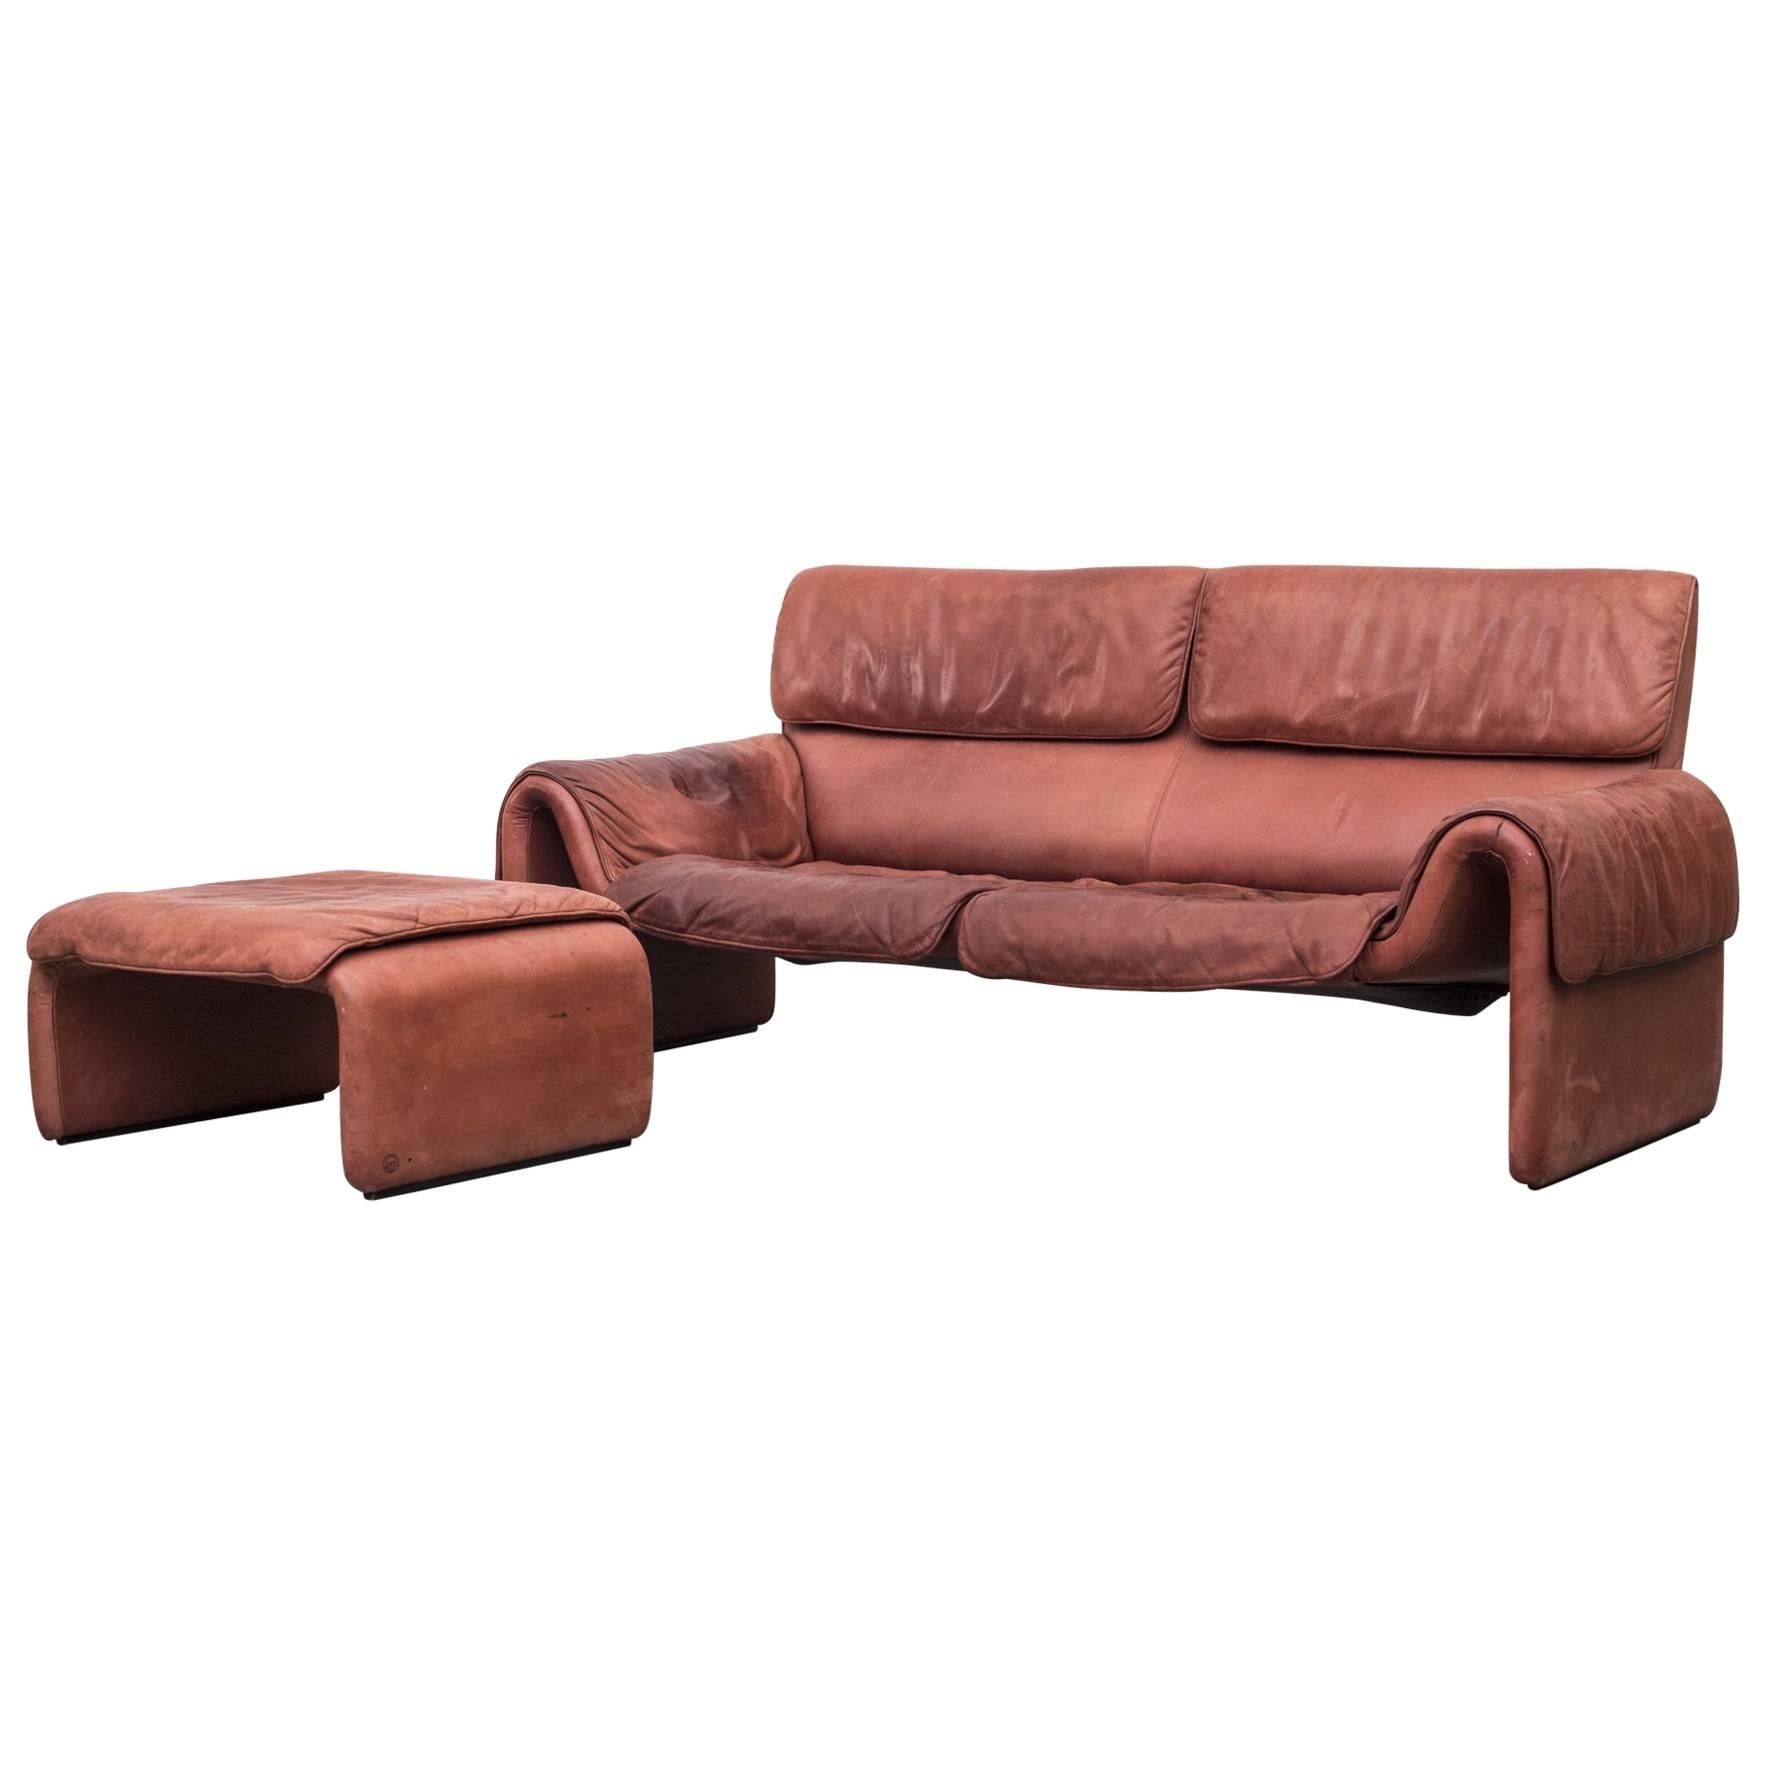 Desede Style Salmon Leather Sofa and Ottoman